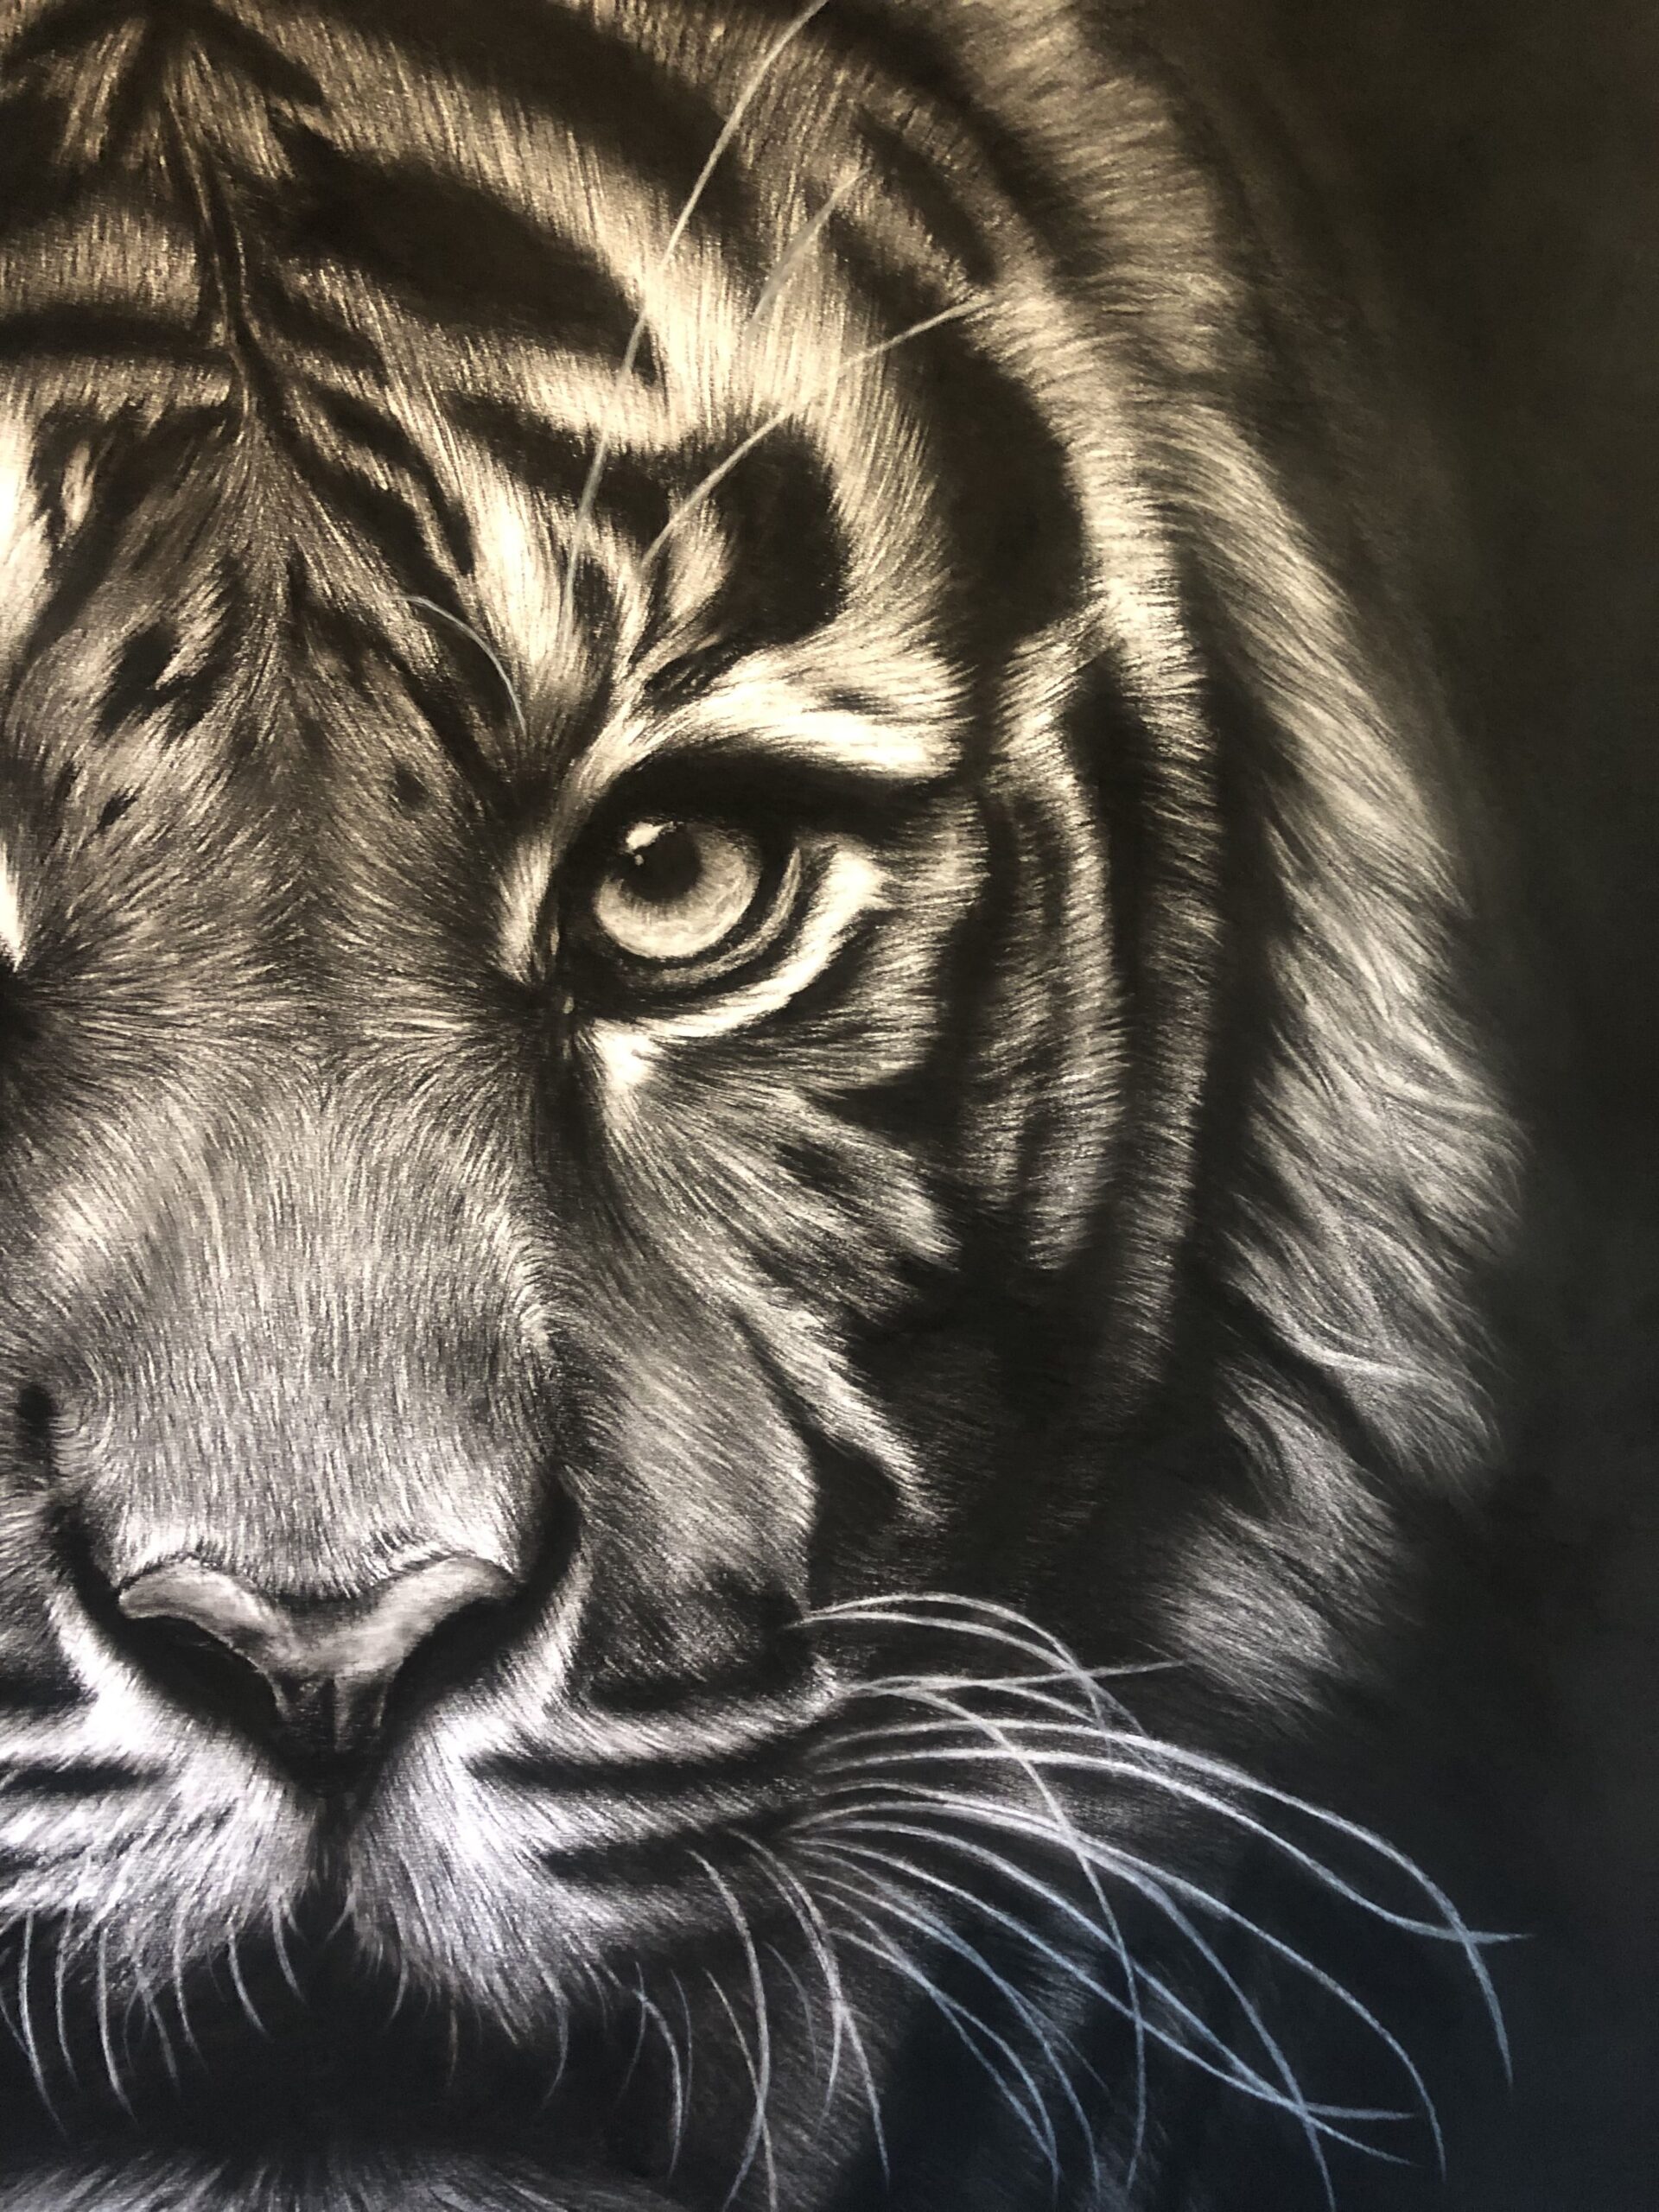 dessin au fusain de tigre par l'artiste peintre animalier chris rossi art dessin animal faune sauvage art animalier